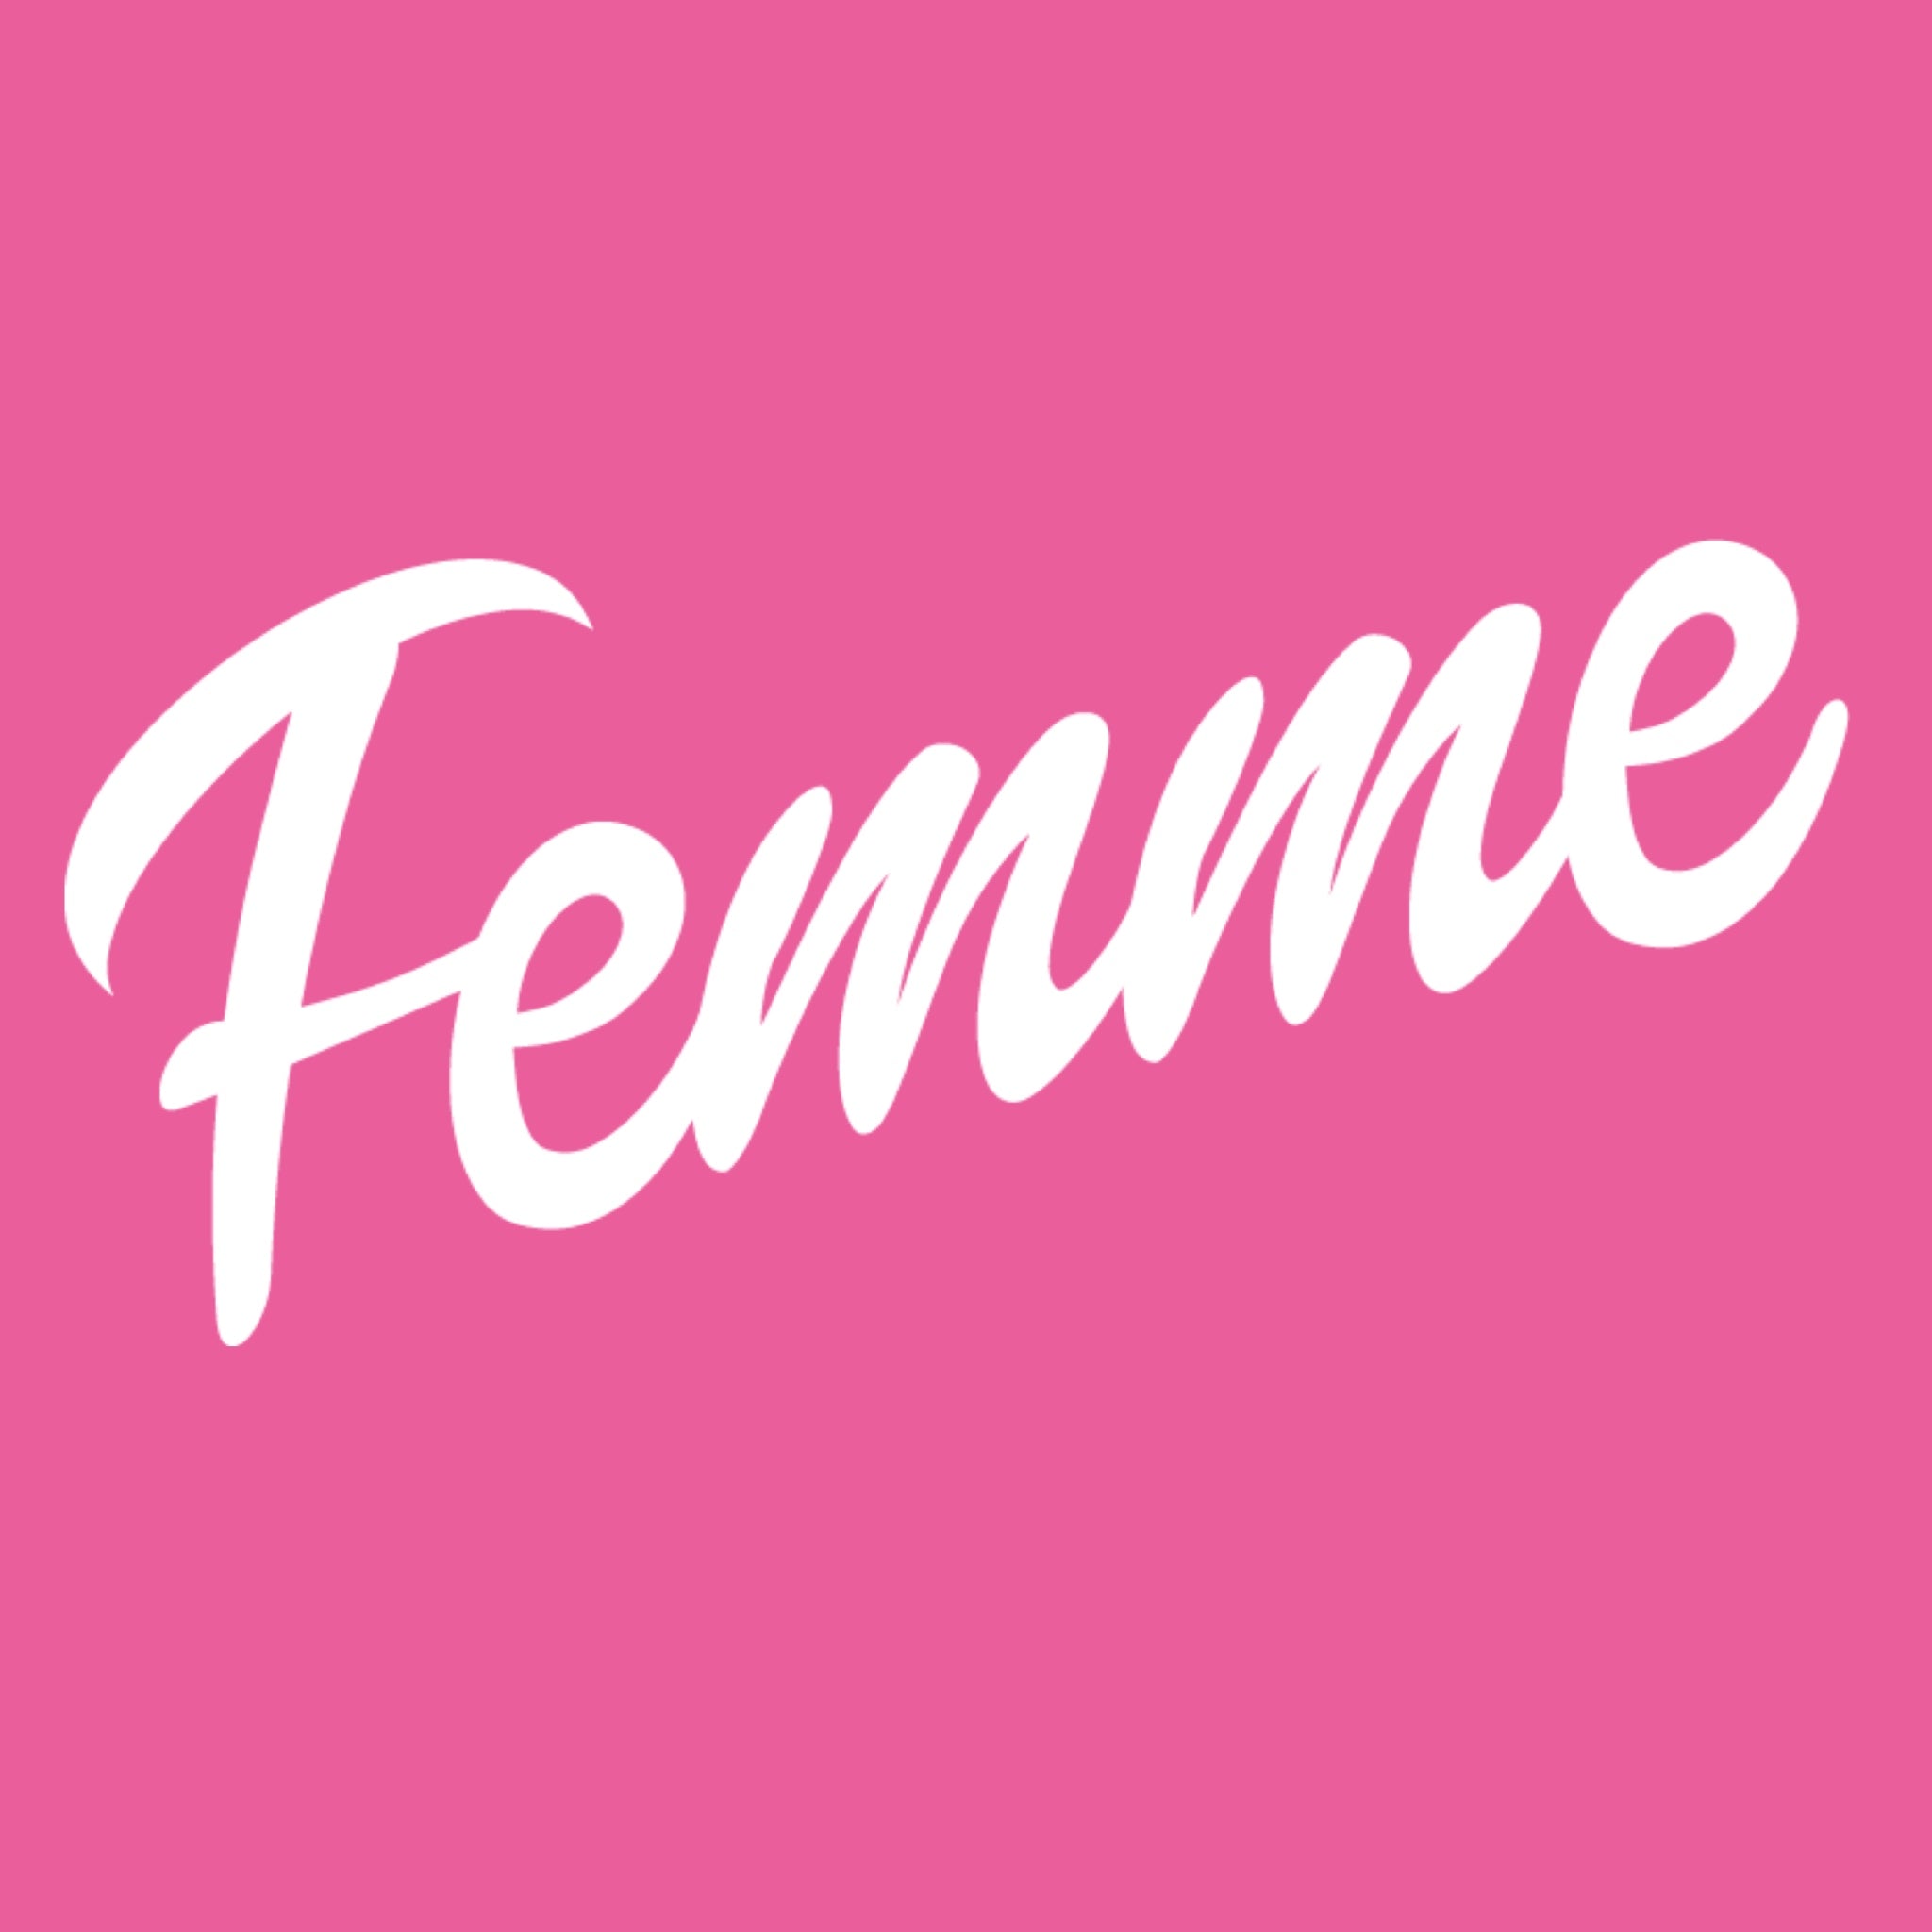 FEMME Sweatshirt - Pink Pink Pink